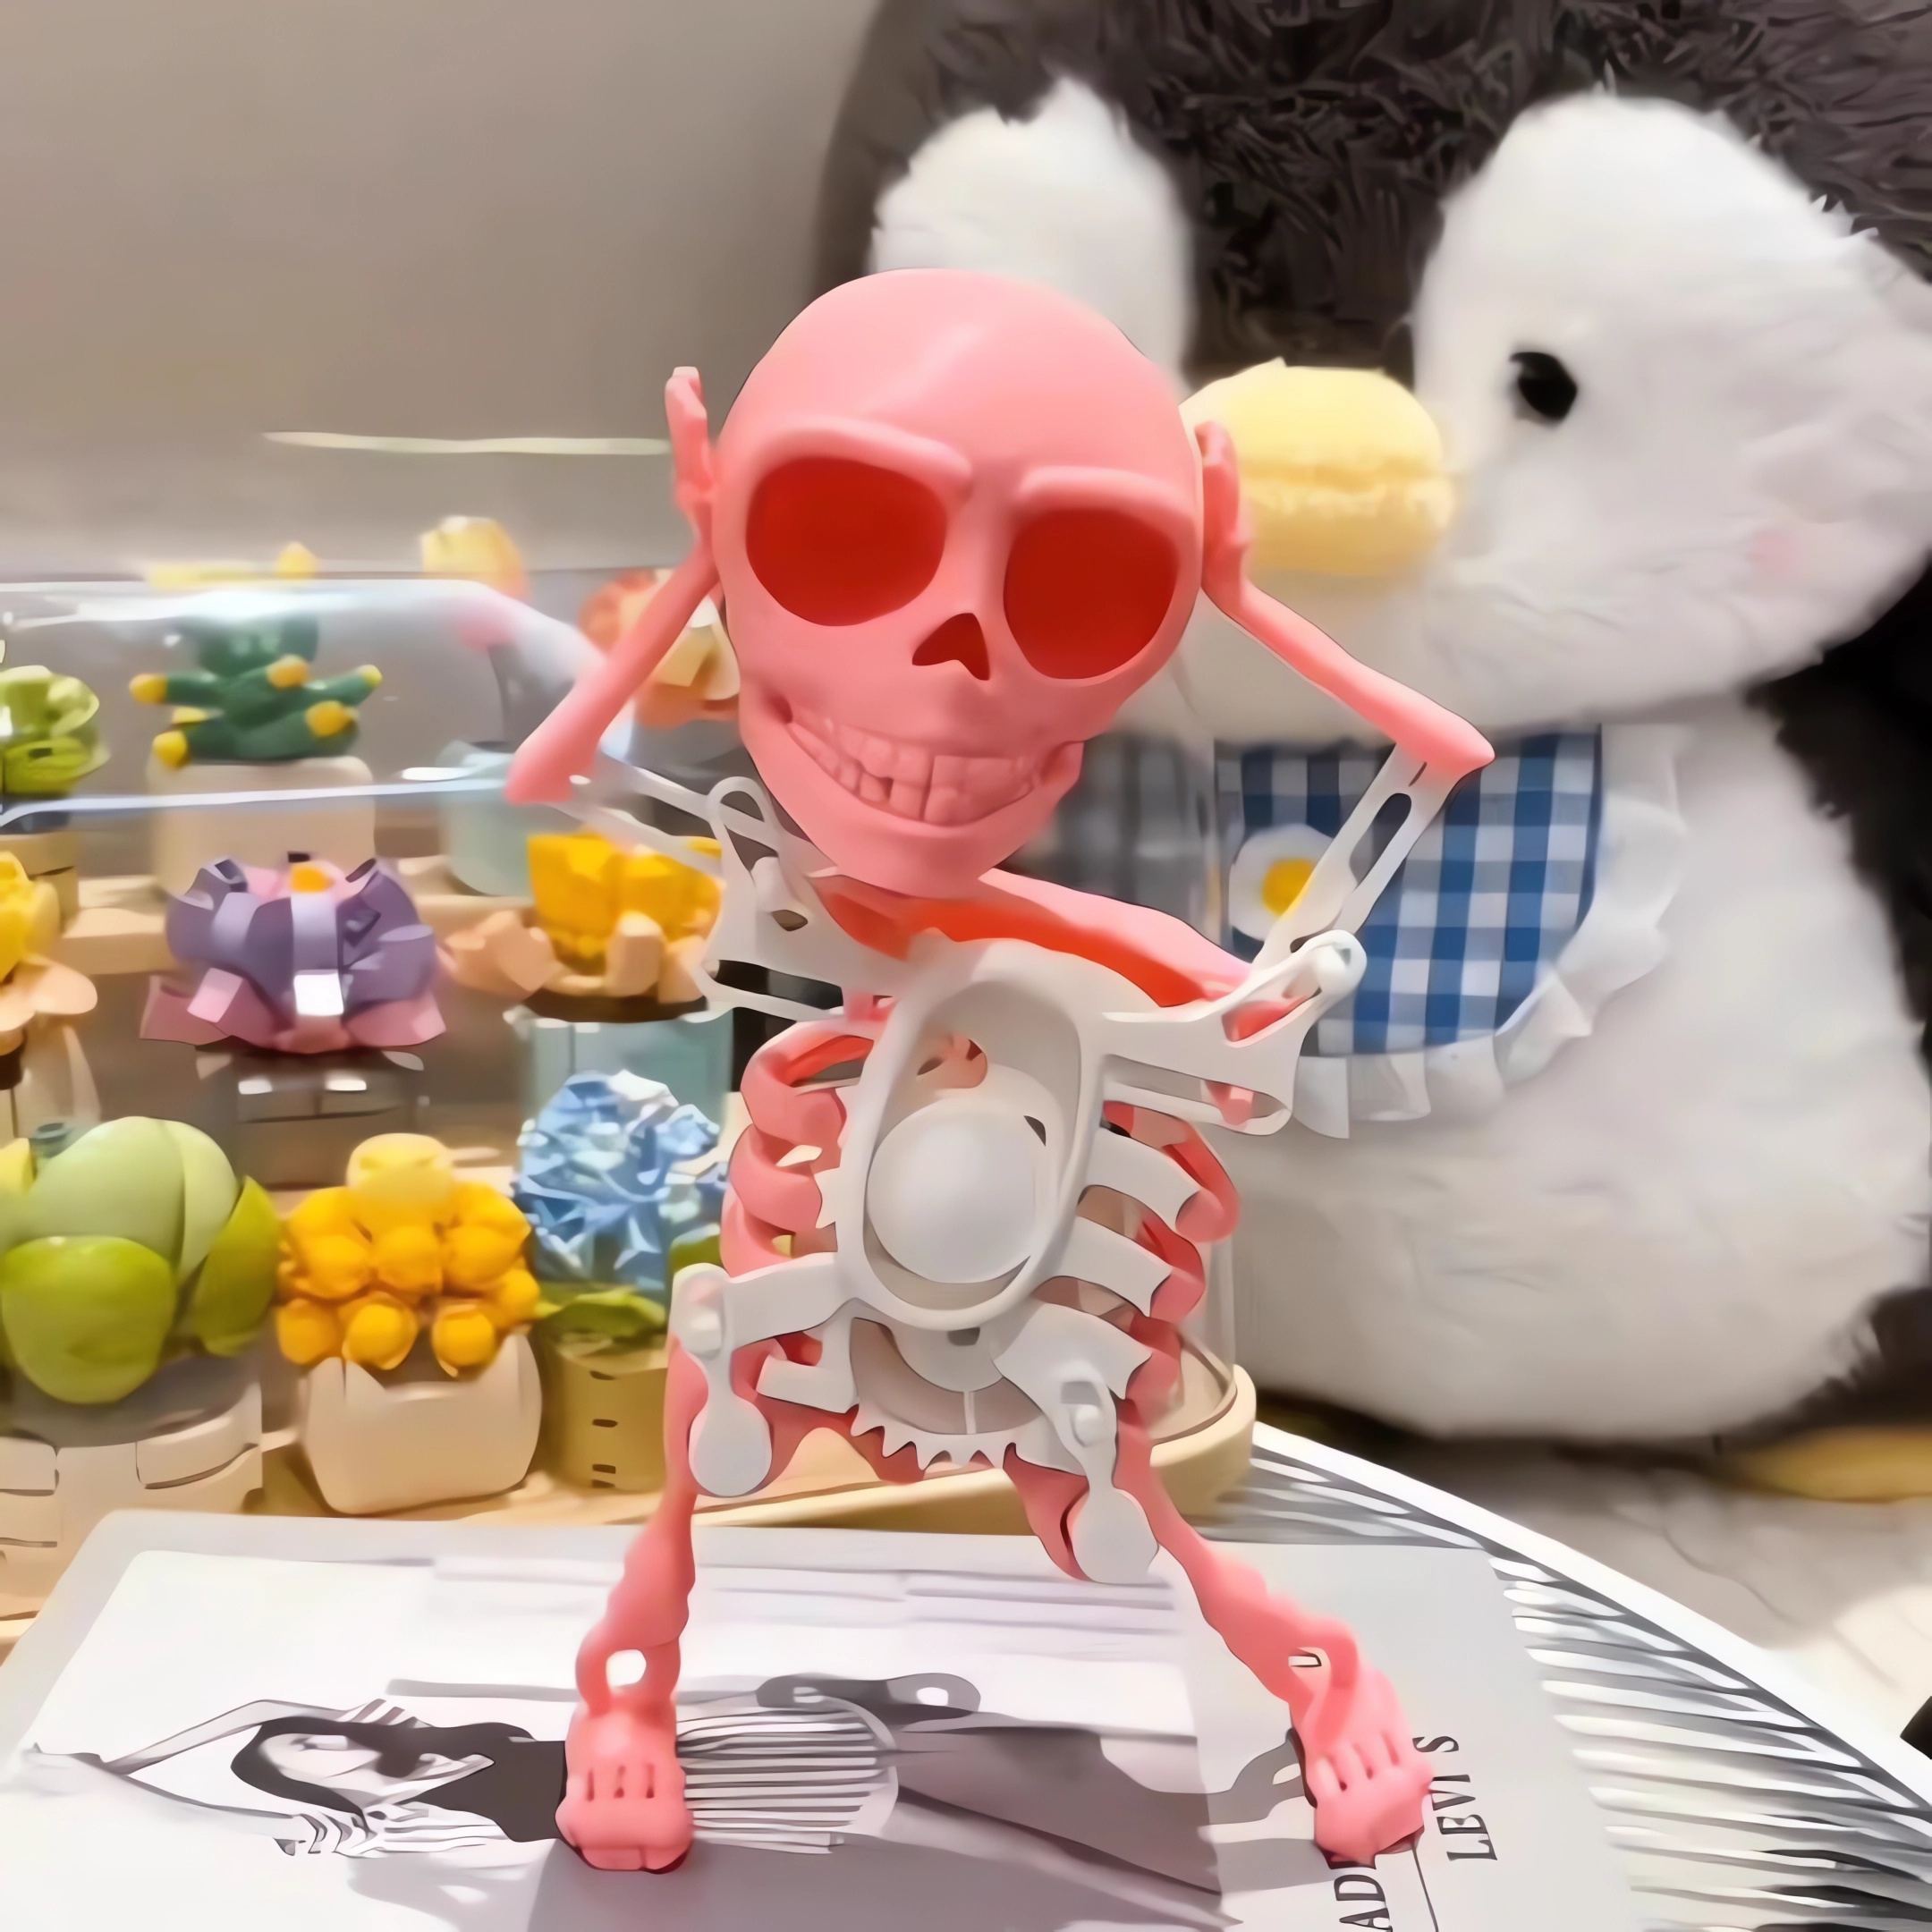 🤣Funny Clockwork Toy - Dancing Skeleton Man💀